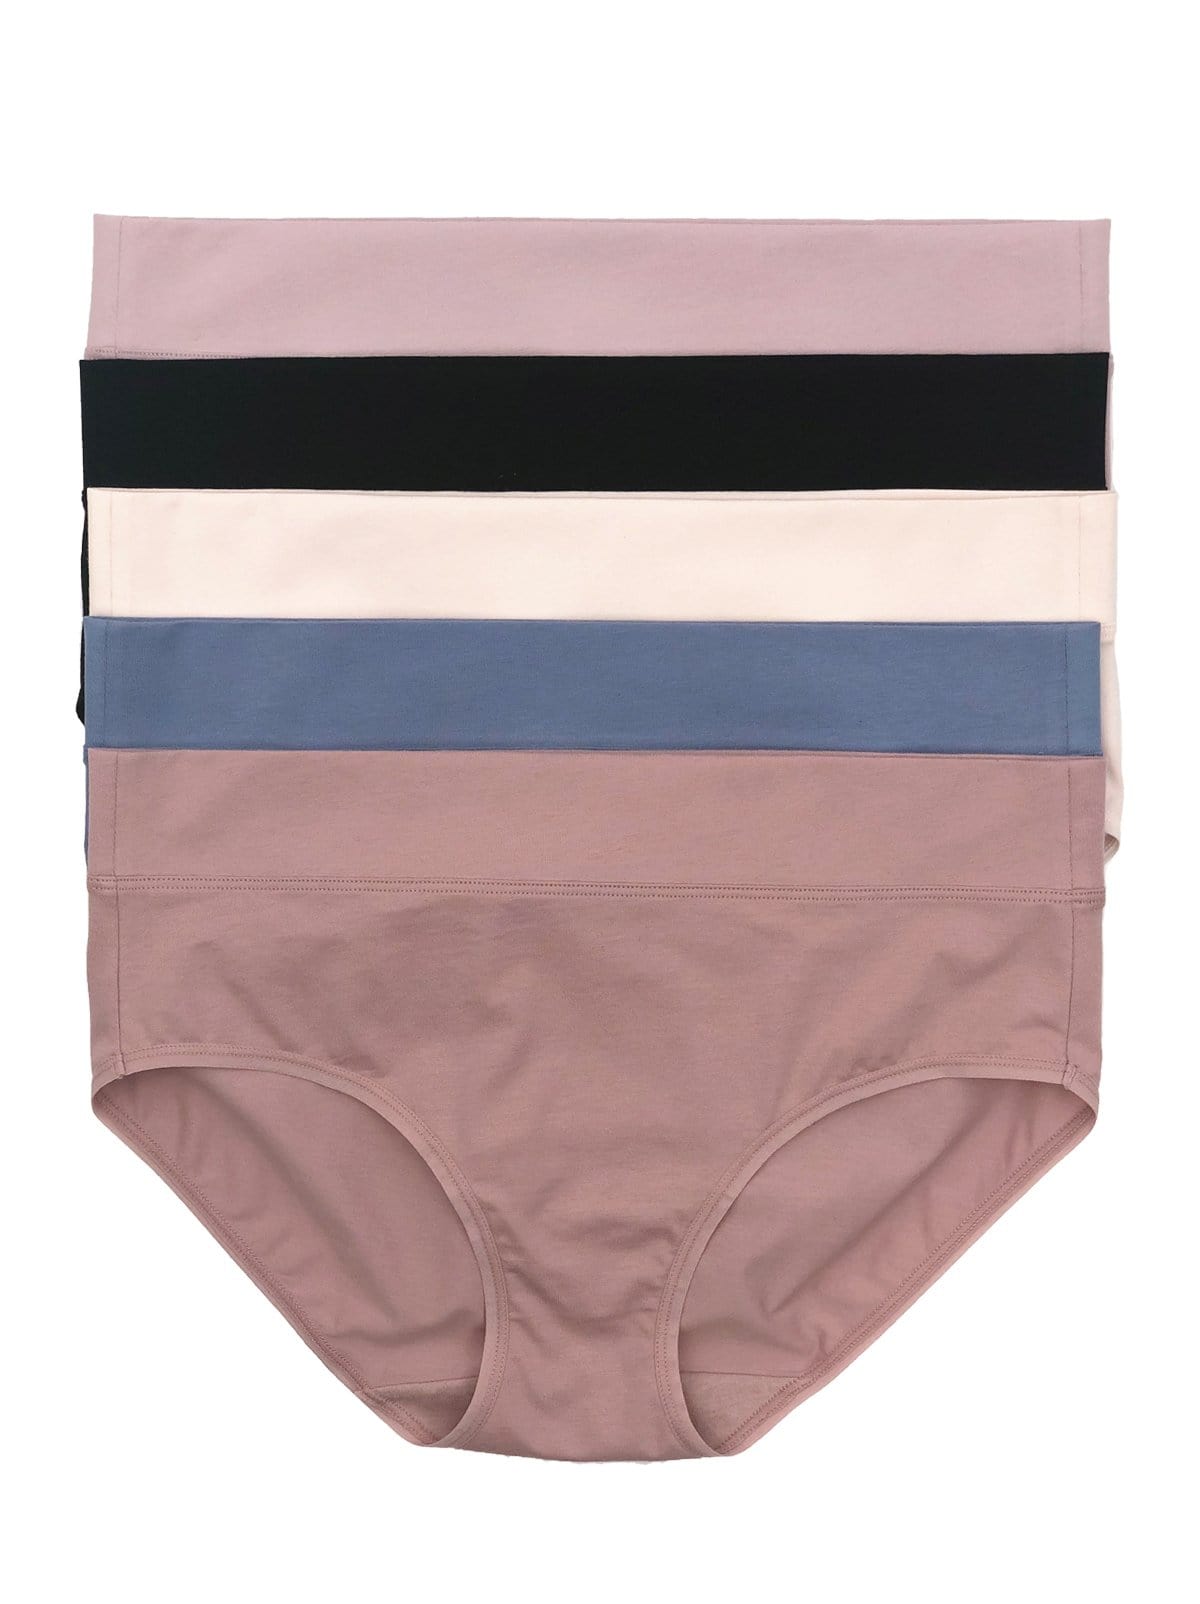 Postgrado  Felina Panties Underwear Organic Cotton 5 Pack Hipster